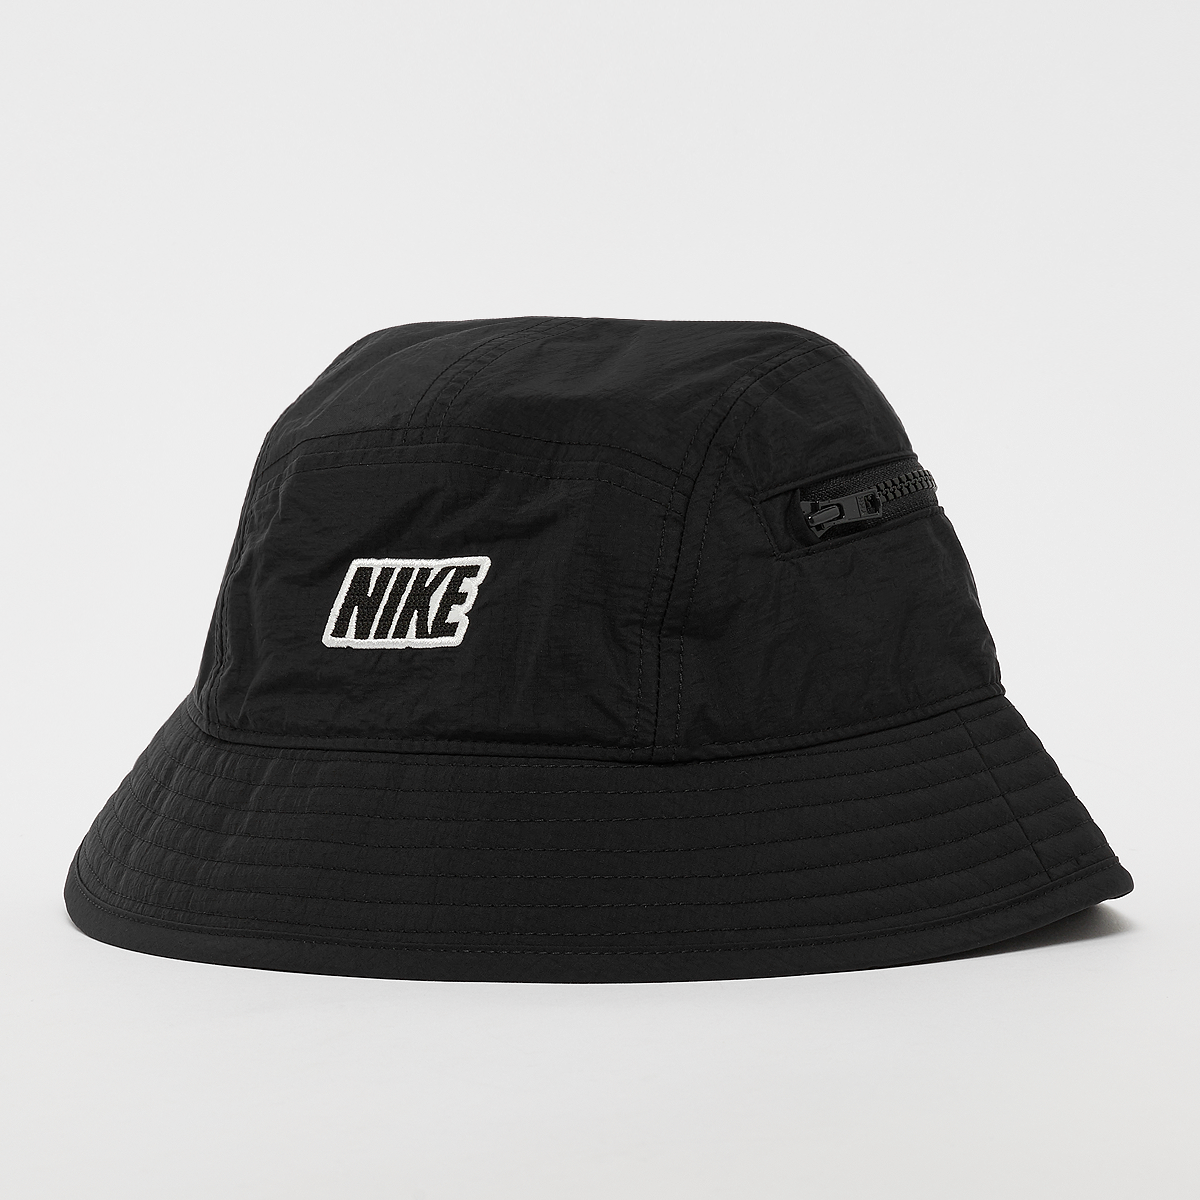 Apex Bucket Hat, NIKE, Accessoires, black/summit white, taille: S